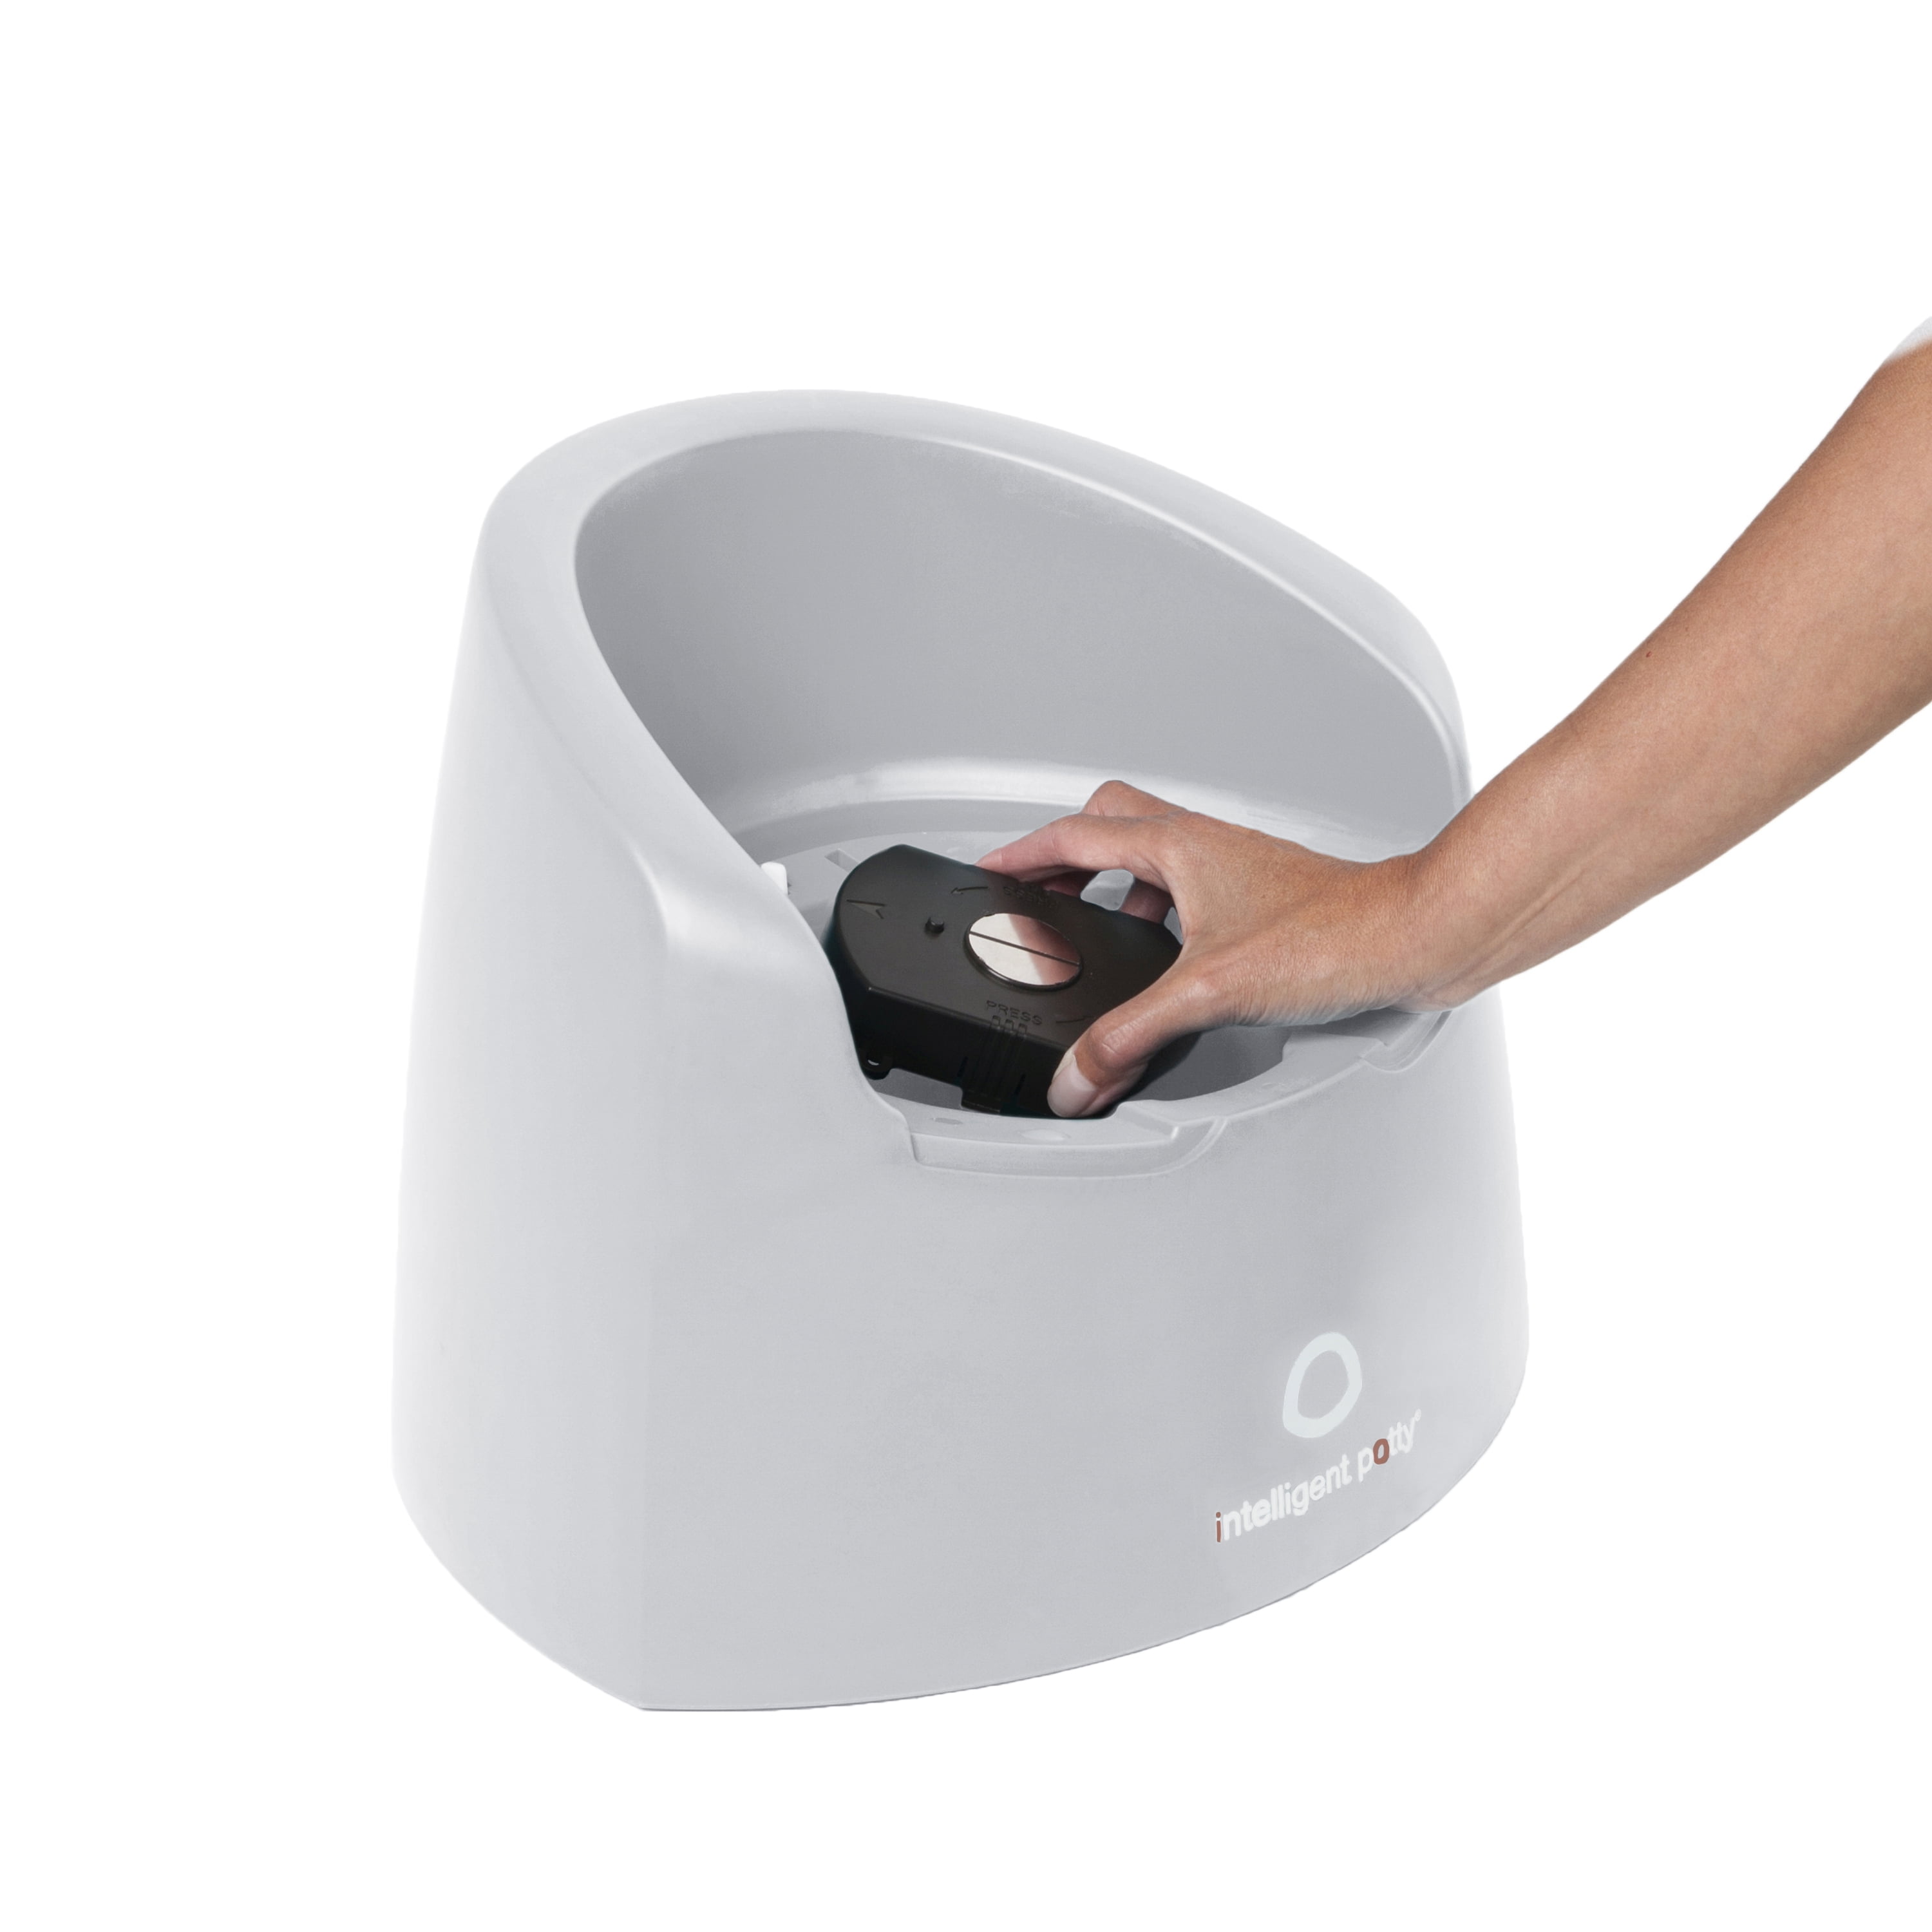 Monbebe Intelligent Potty Training Toilet with Sound, Stone Gray